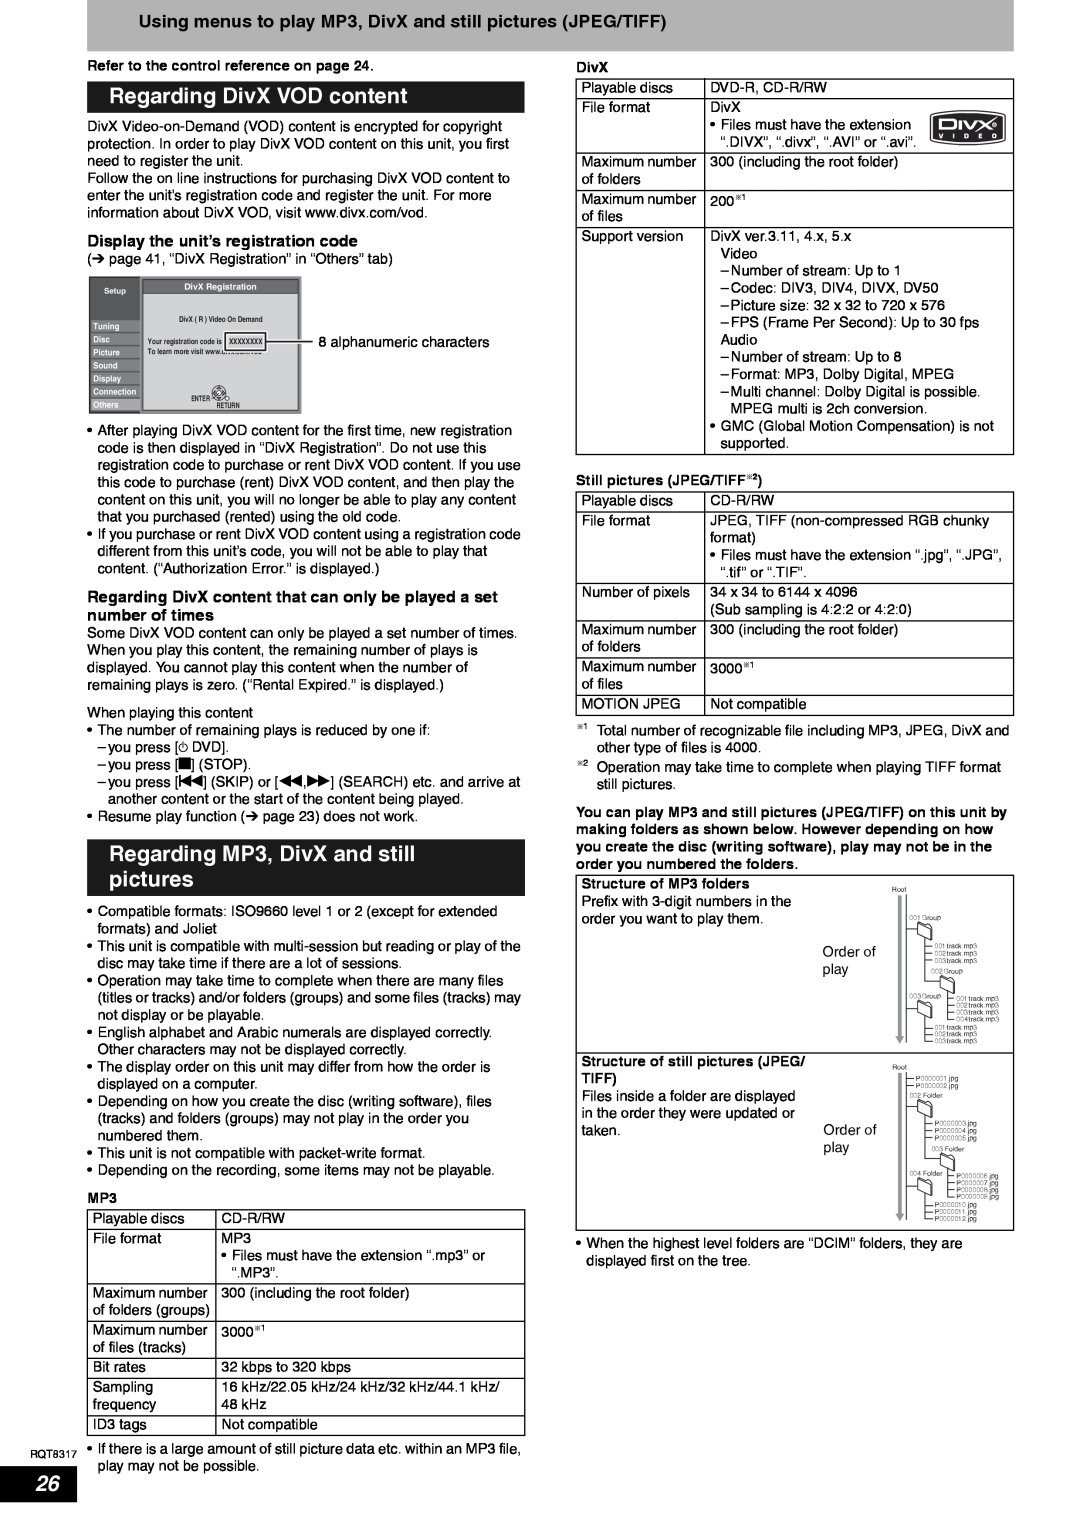 Panasonic DMR-ES15 manual Regarding DivX VOD content, Regarding MP3, DivX and still, pictures 